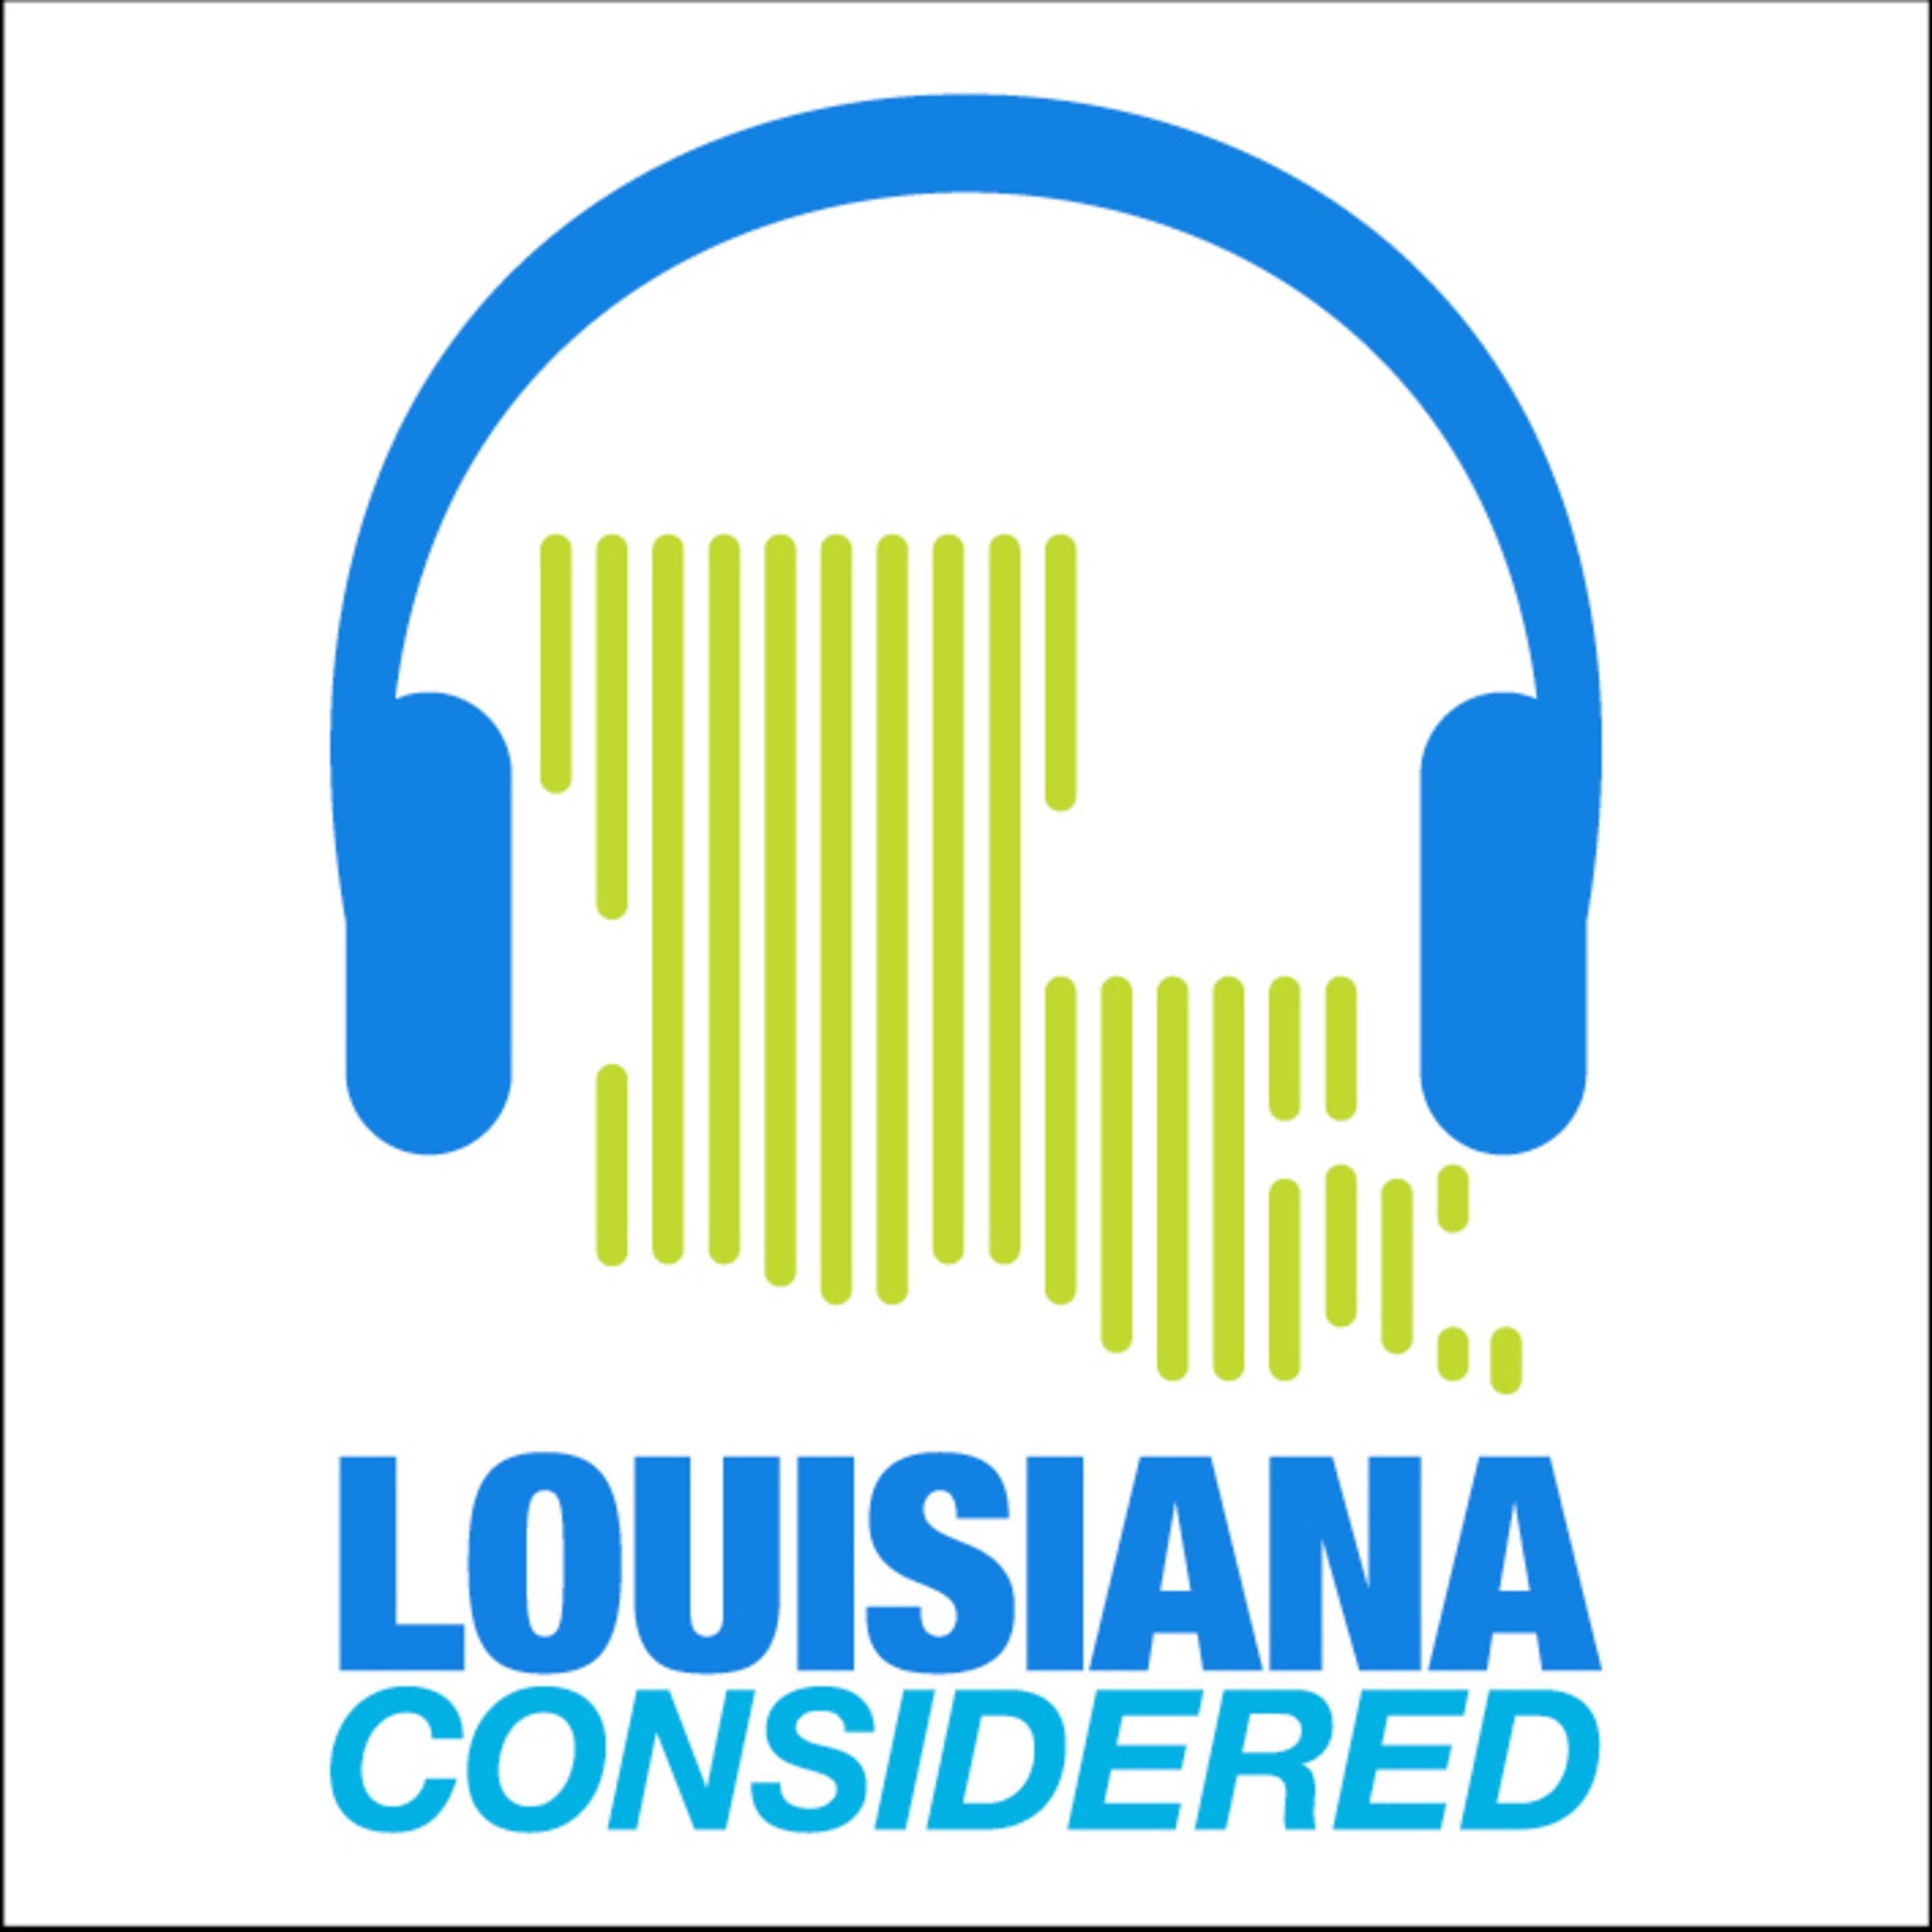 Thumbnail for "Louisiana Considered: Broken promises to Louisiana prisoners led to wrongful life sentences".